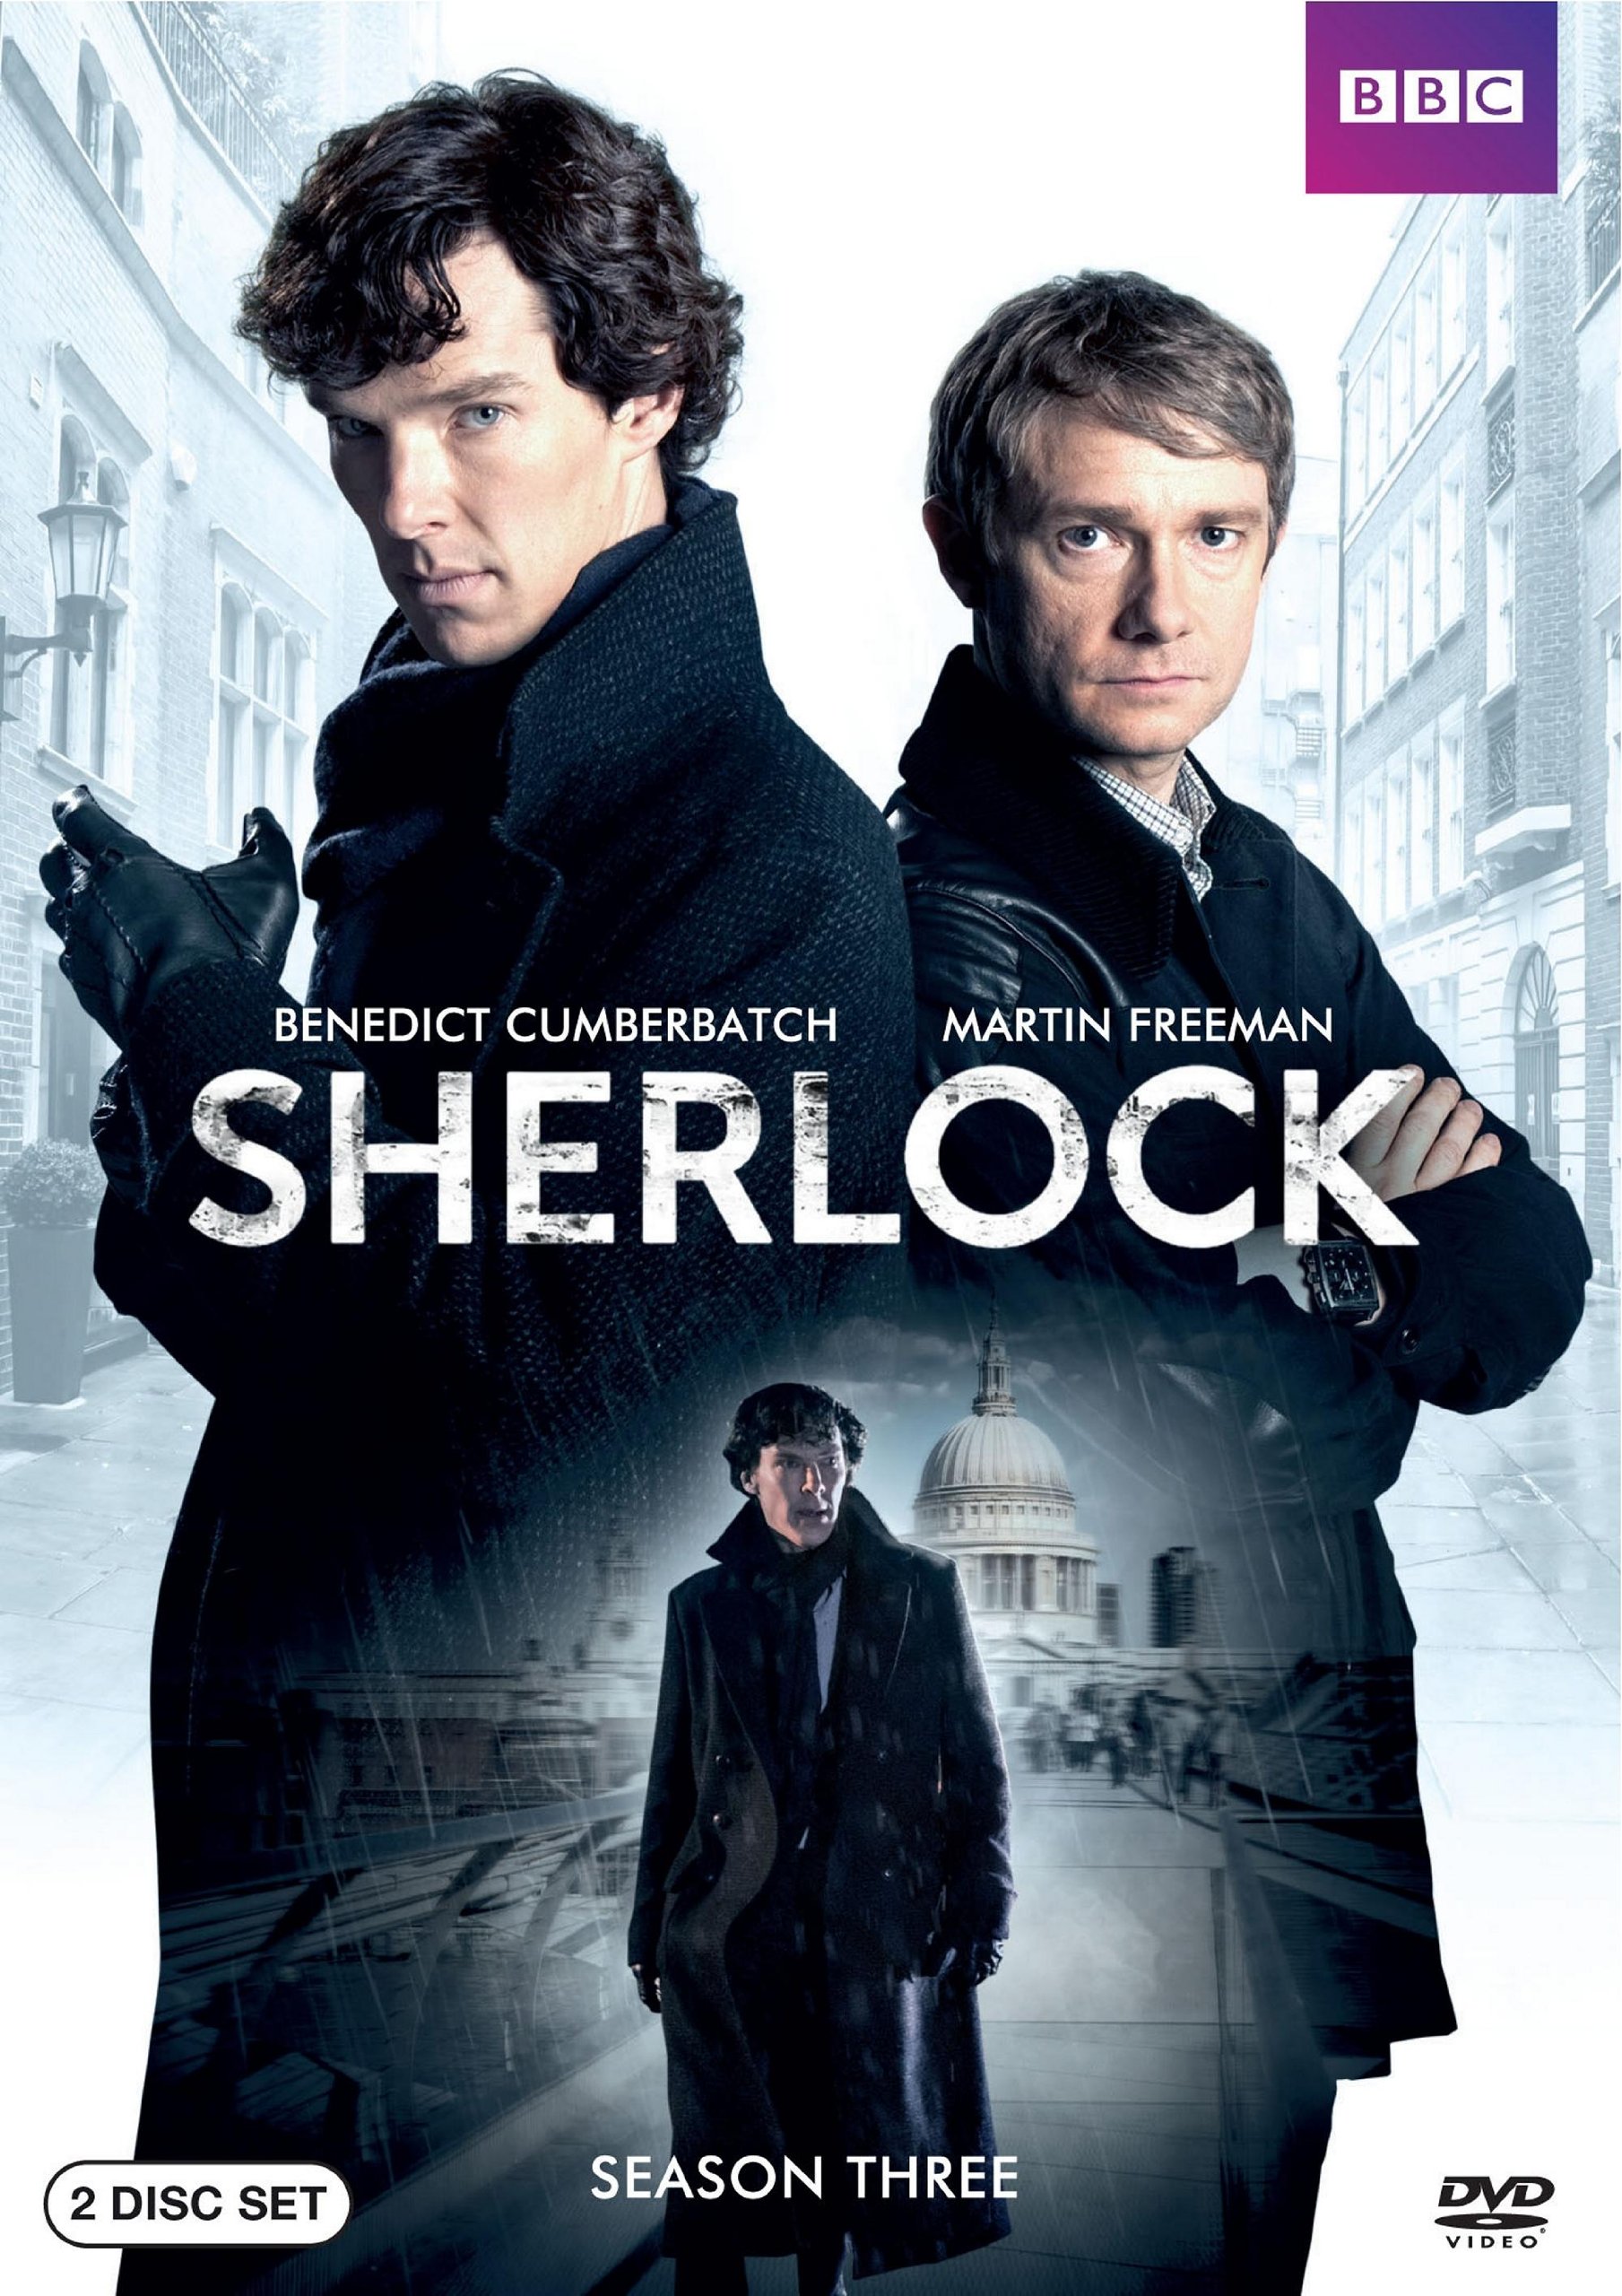 Sherlock Holmes Season 1 - BBC Sherlock Season 1 Episode # 2 "The Blind Banker ... - Пол макгиган, ник харран, коки гидройч и др.